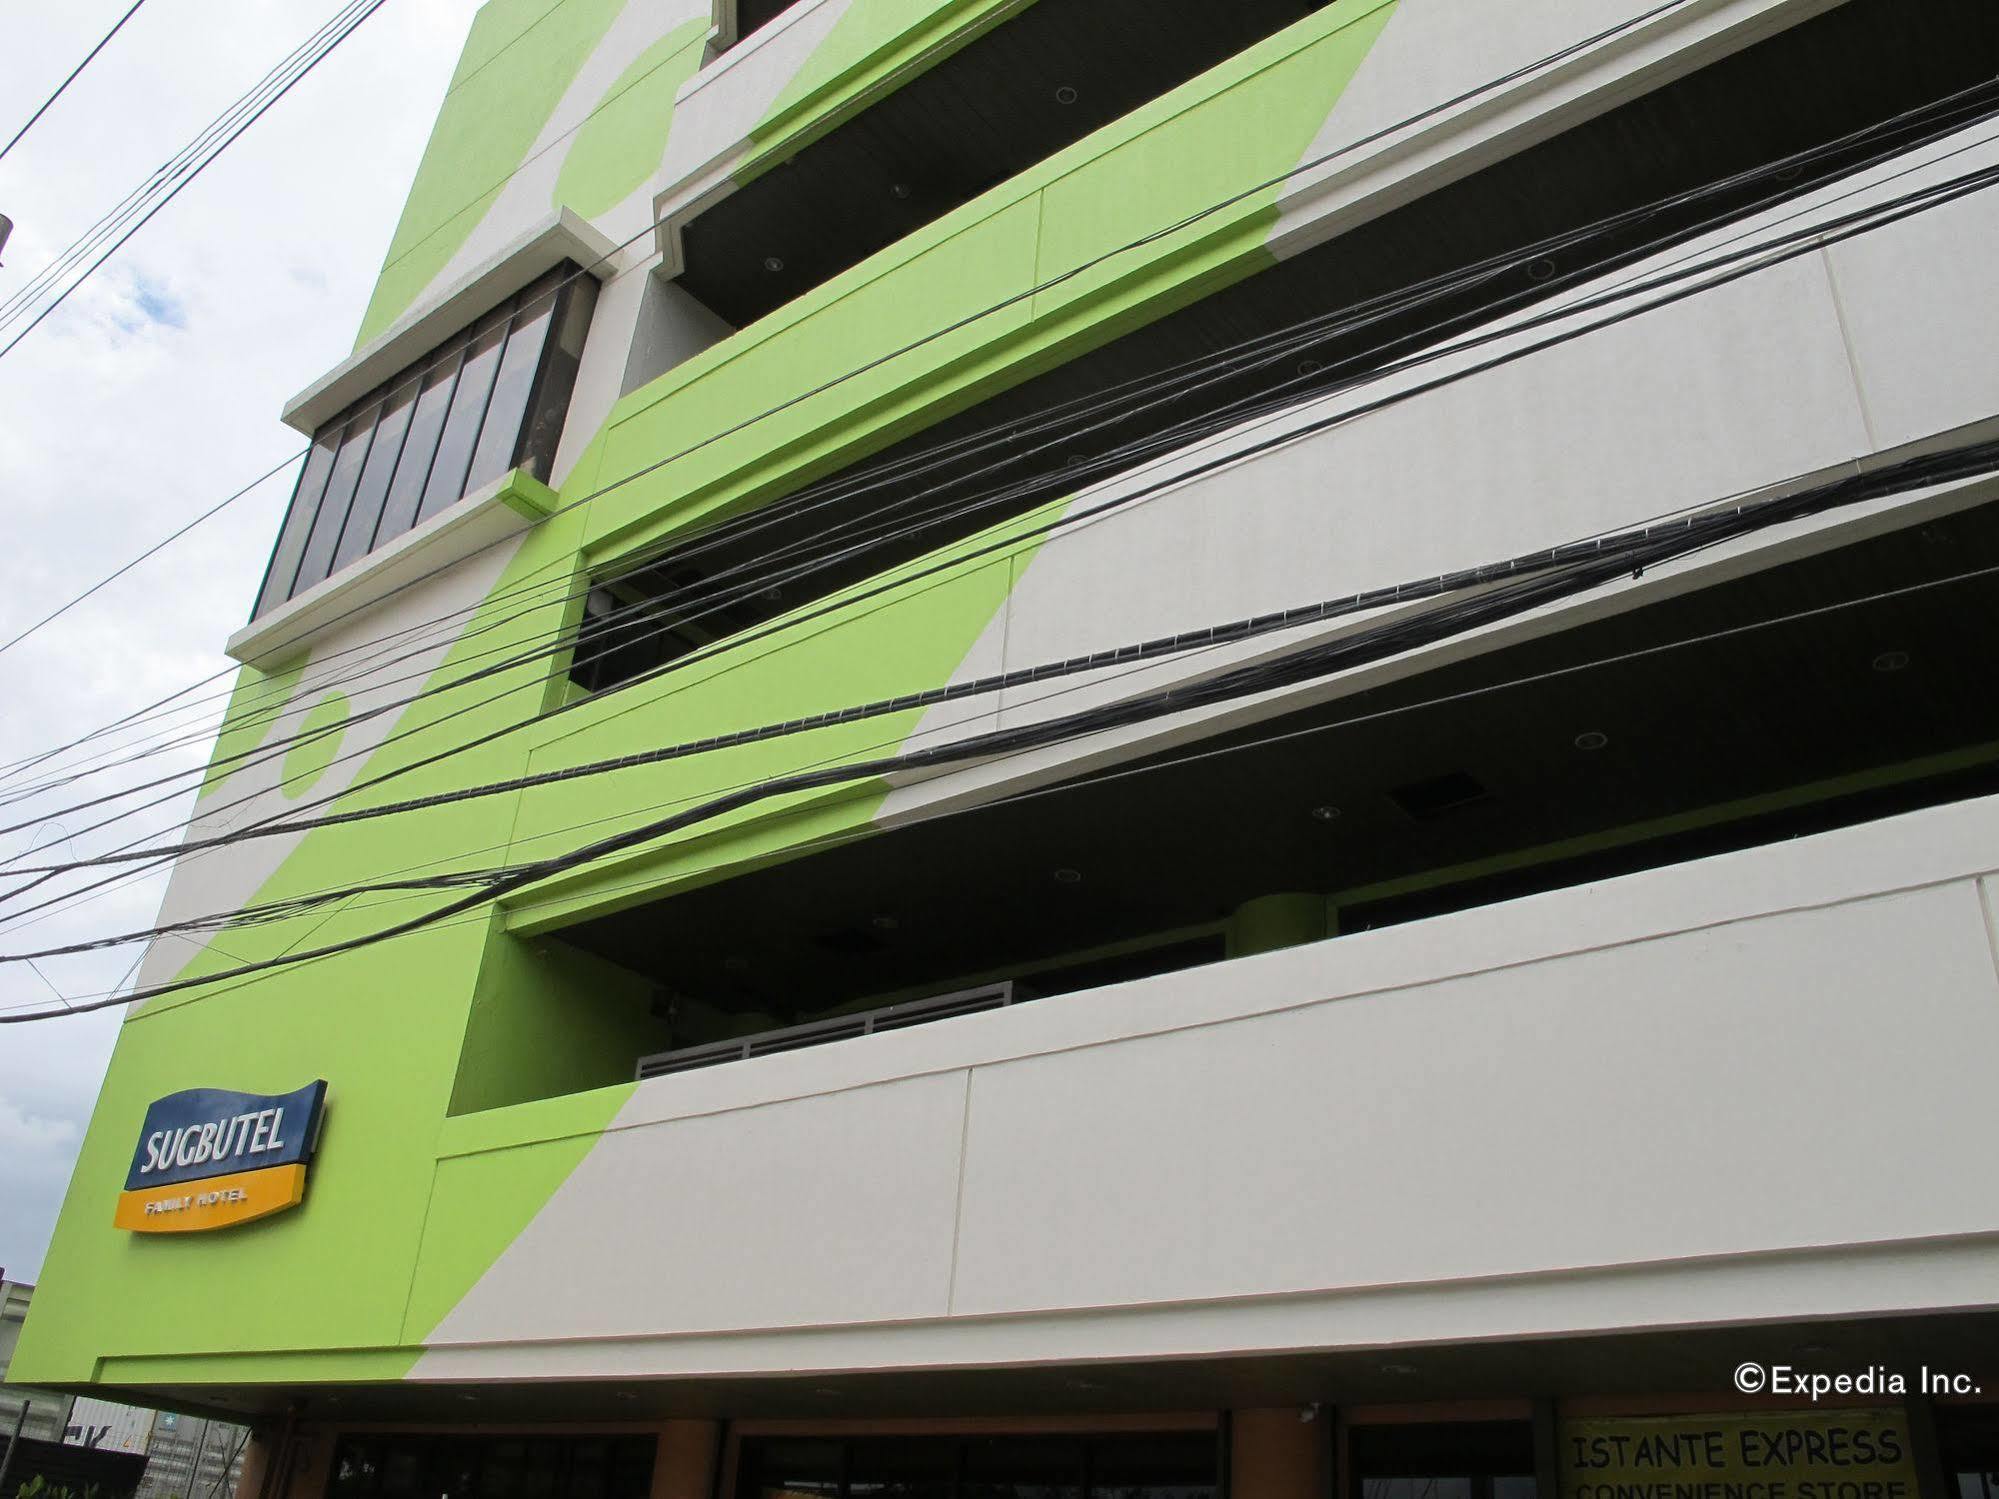 Sugbutel Family Hotel Cebu Stadt Exterior foto